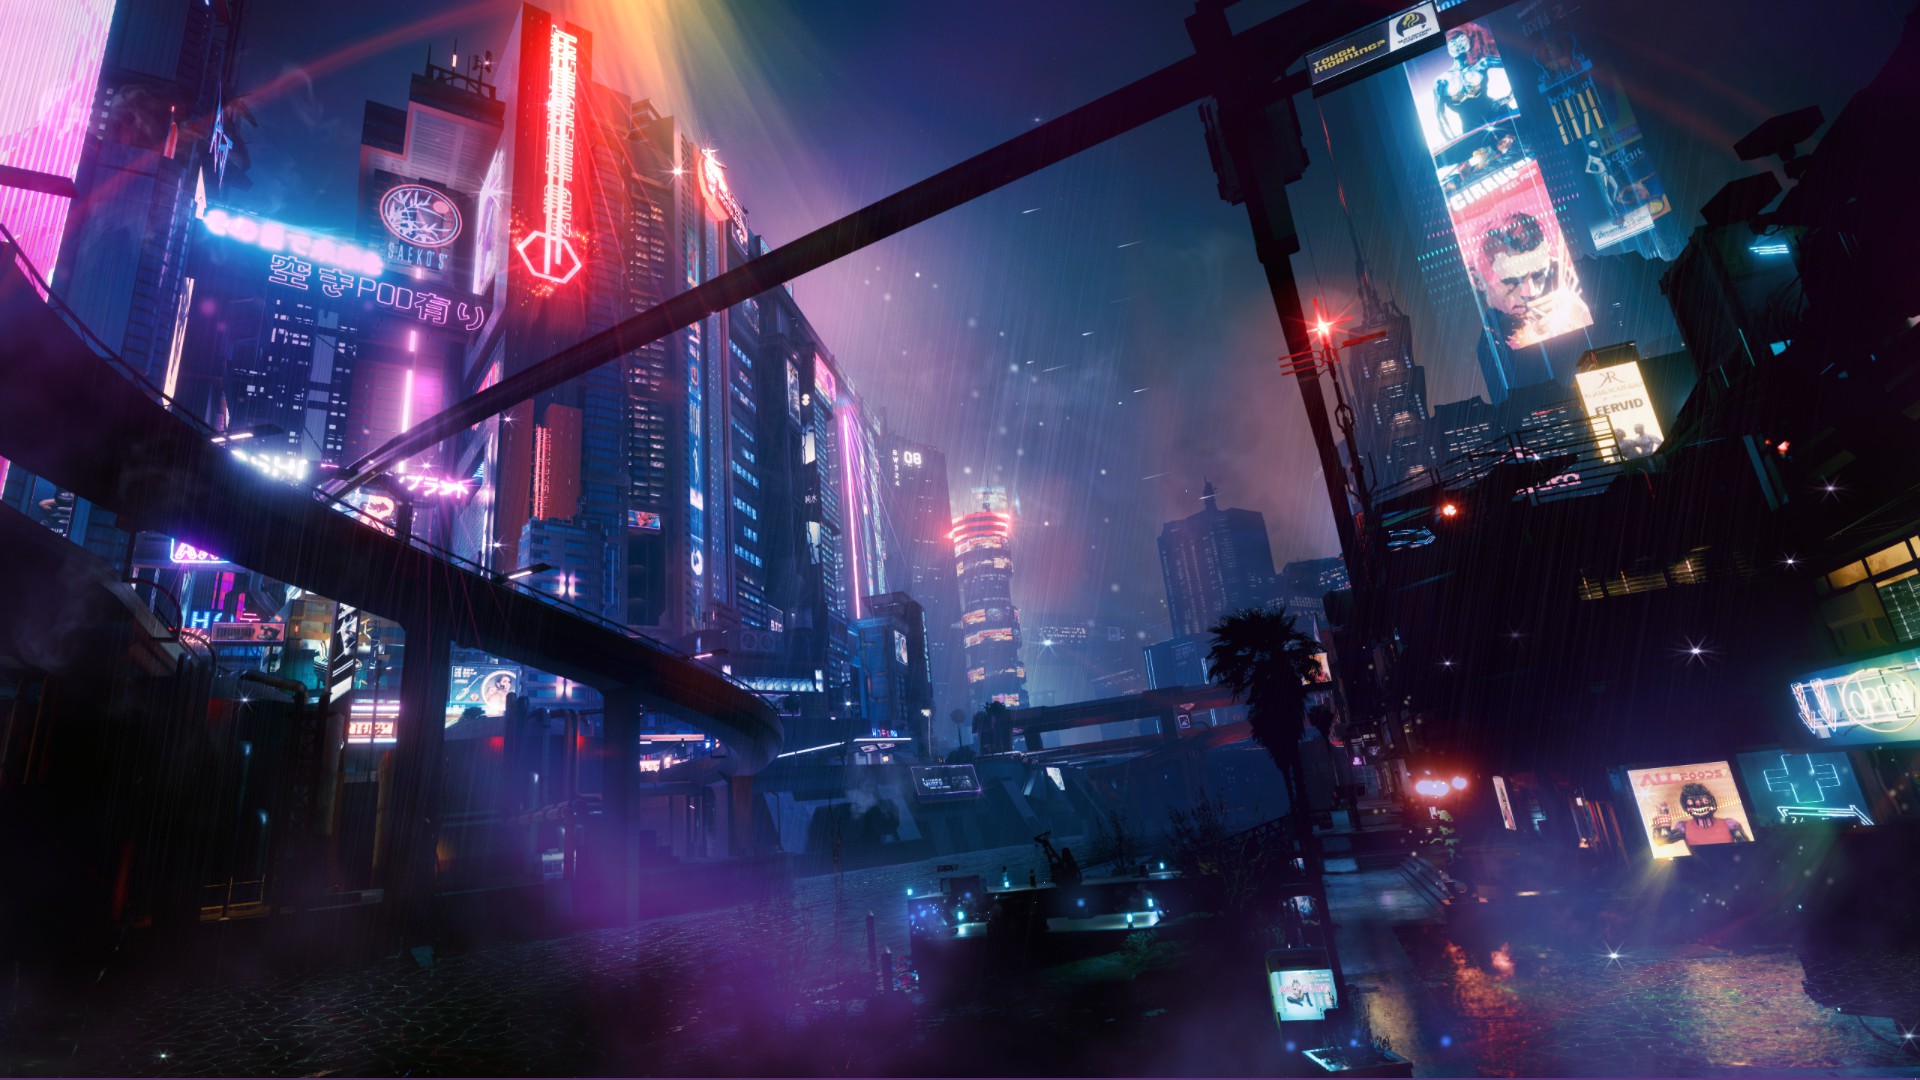 General 1920x1080 Cyberpunk 2077 futuristic city sky screen shot cyberpunk city PC gaming digital art purple blue CD Projekt RED neon